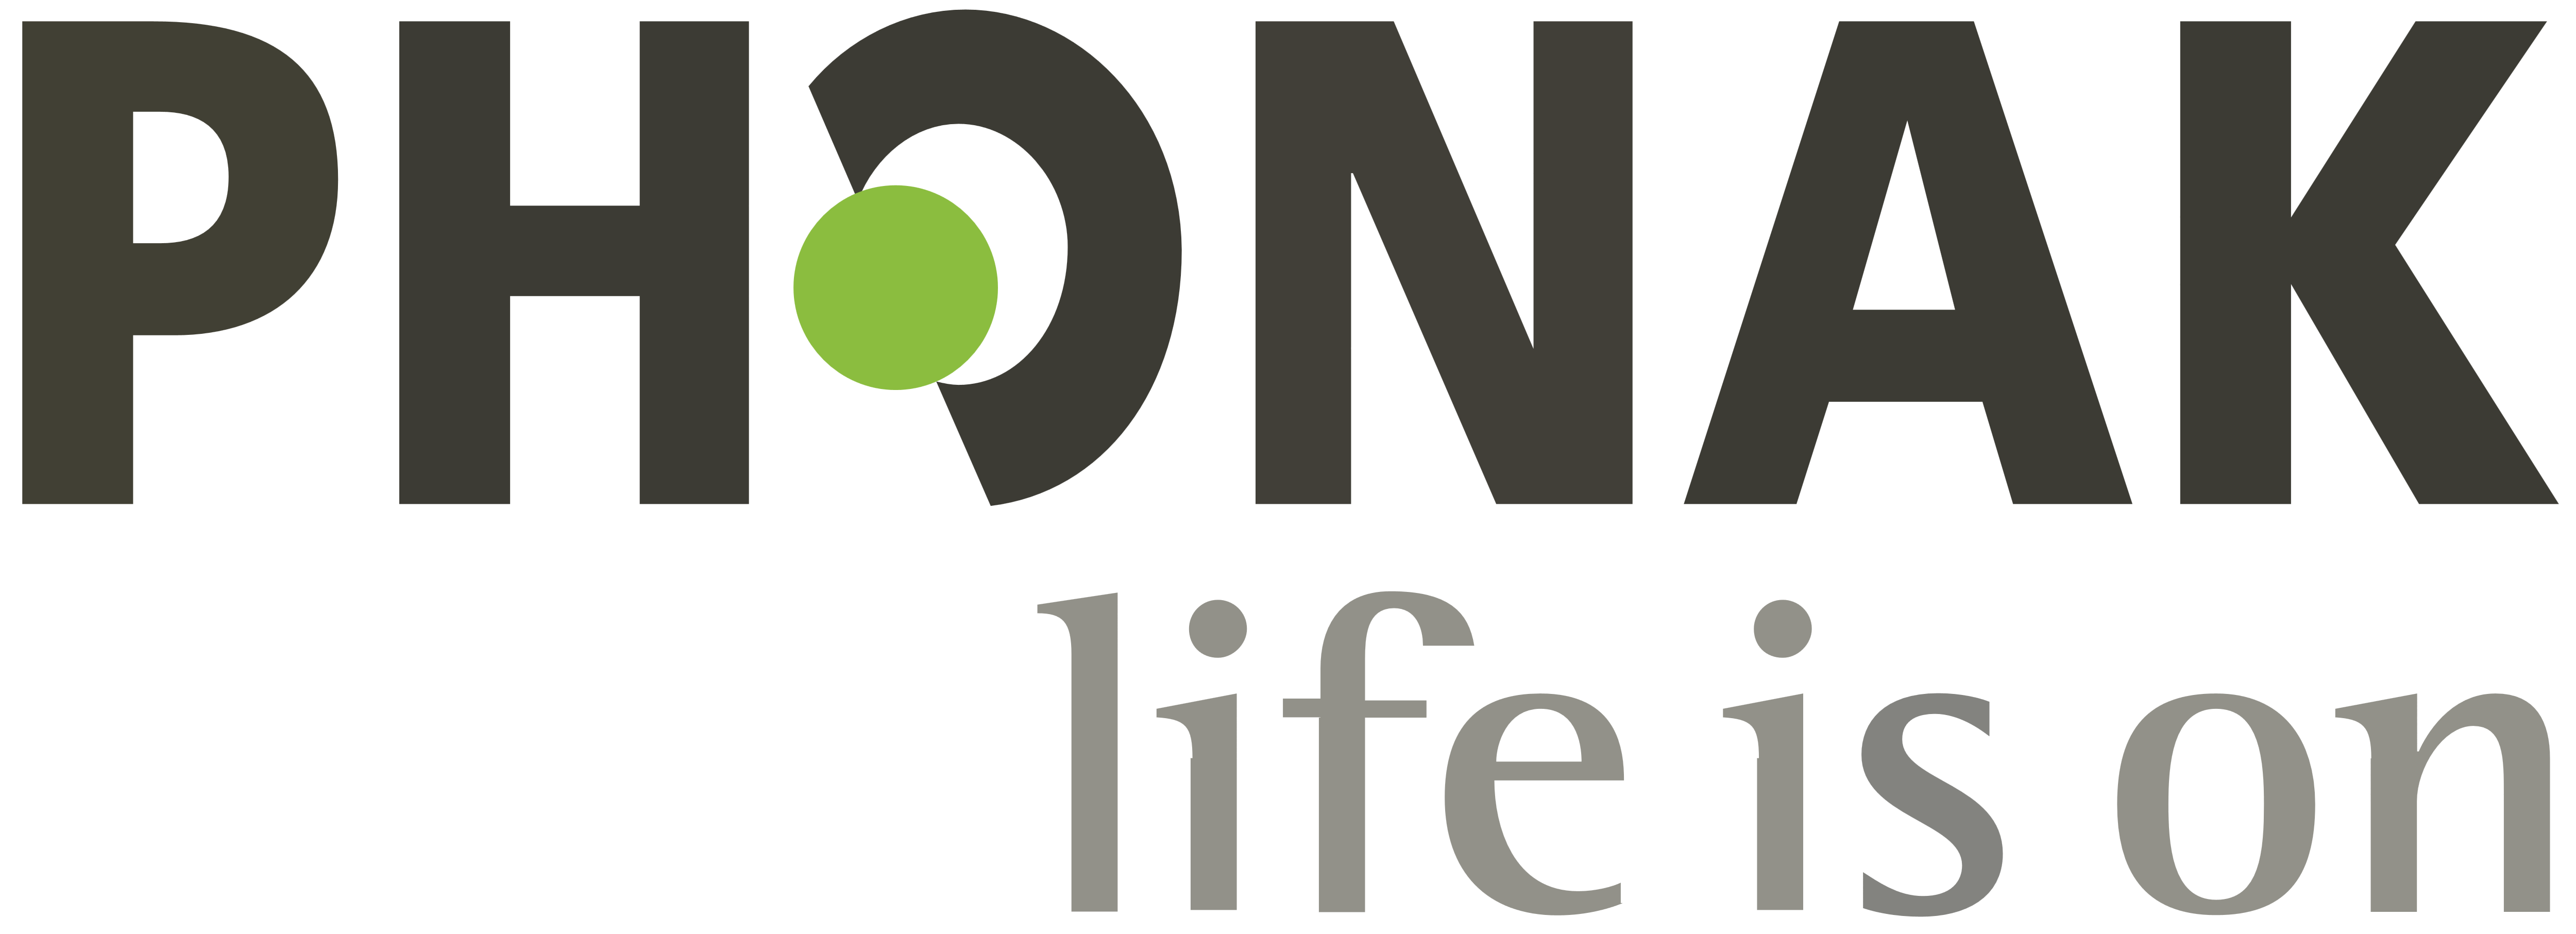 phonak transparent logo